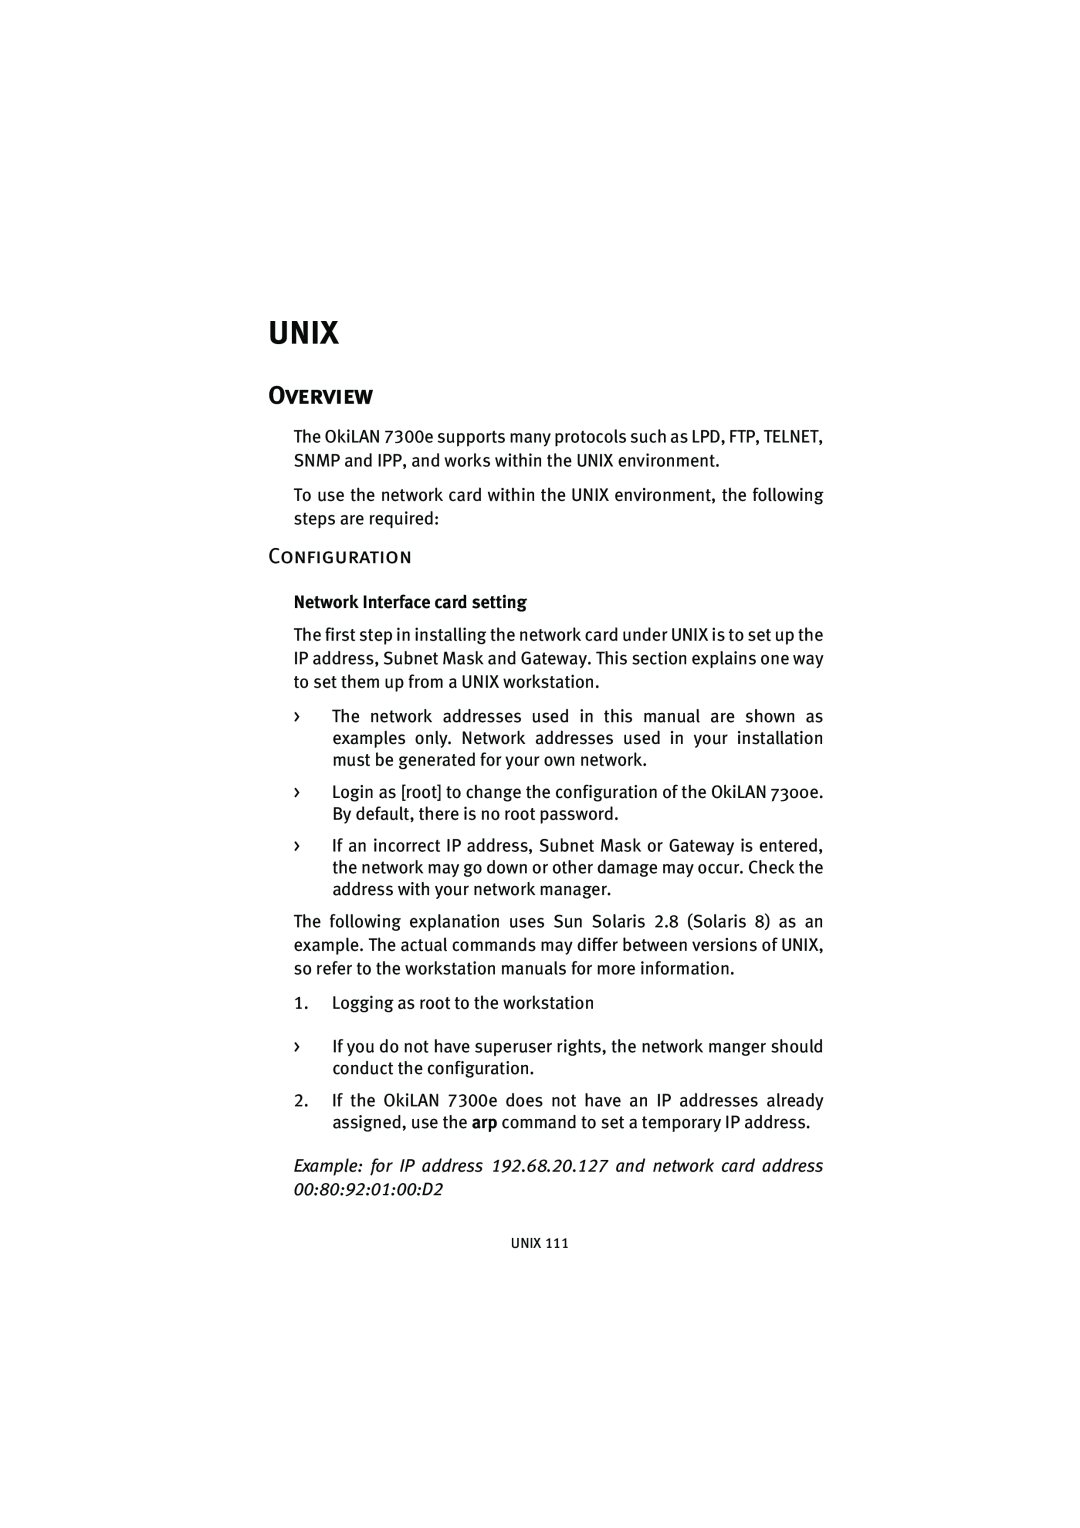 Oki 7300e manual Unix, Configuration, Network Interface card setting, Overview 